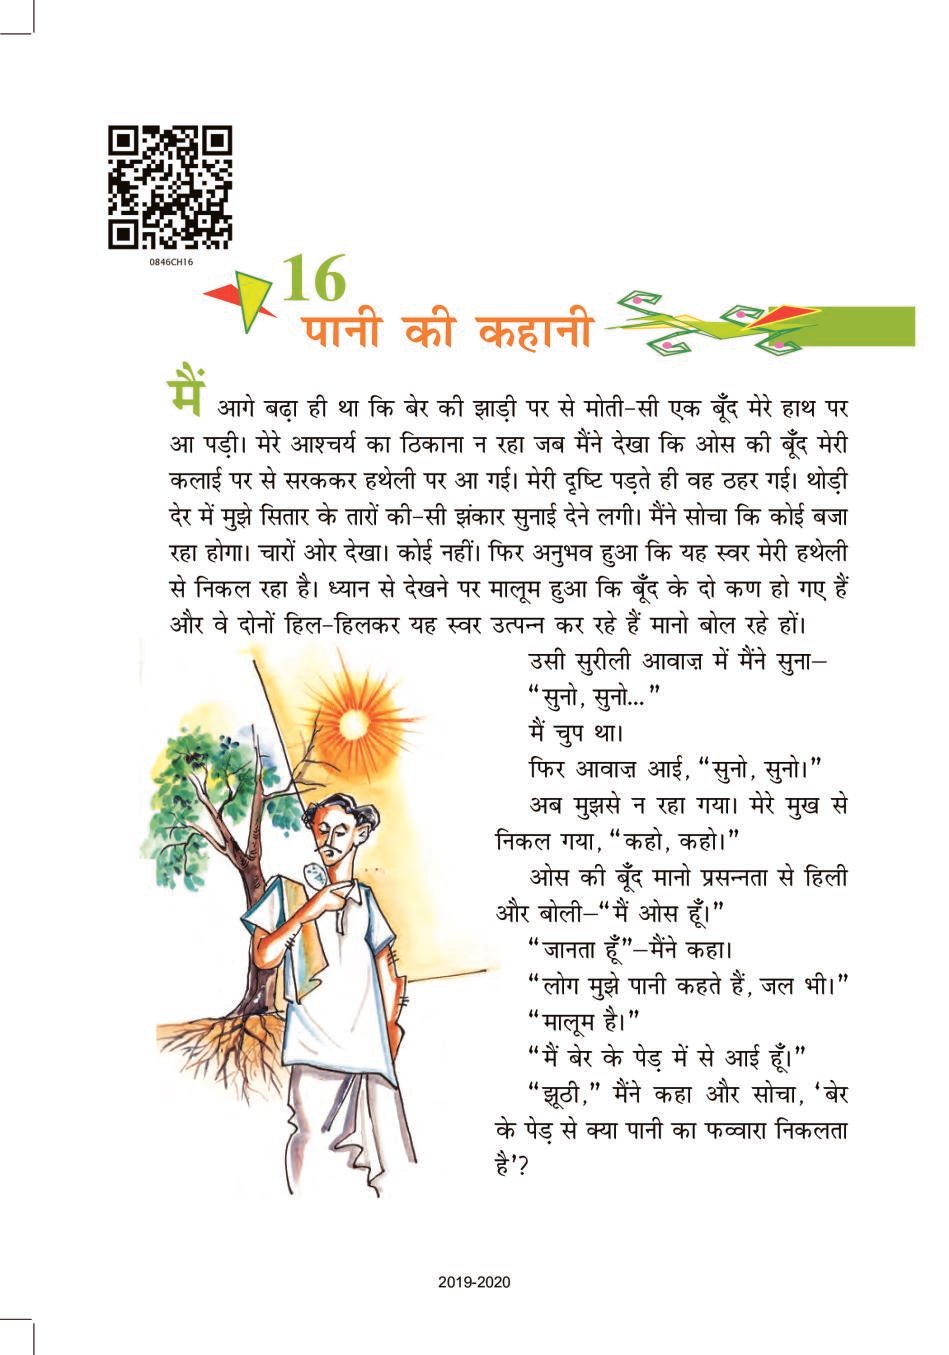 NCERT Book Class 8 Hindi (वसंत) Chapter 16 पानी की कहानी - Page 1